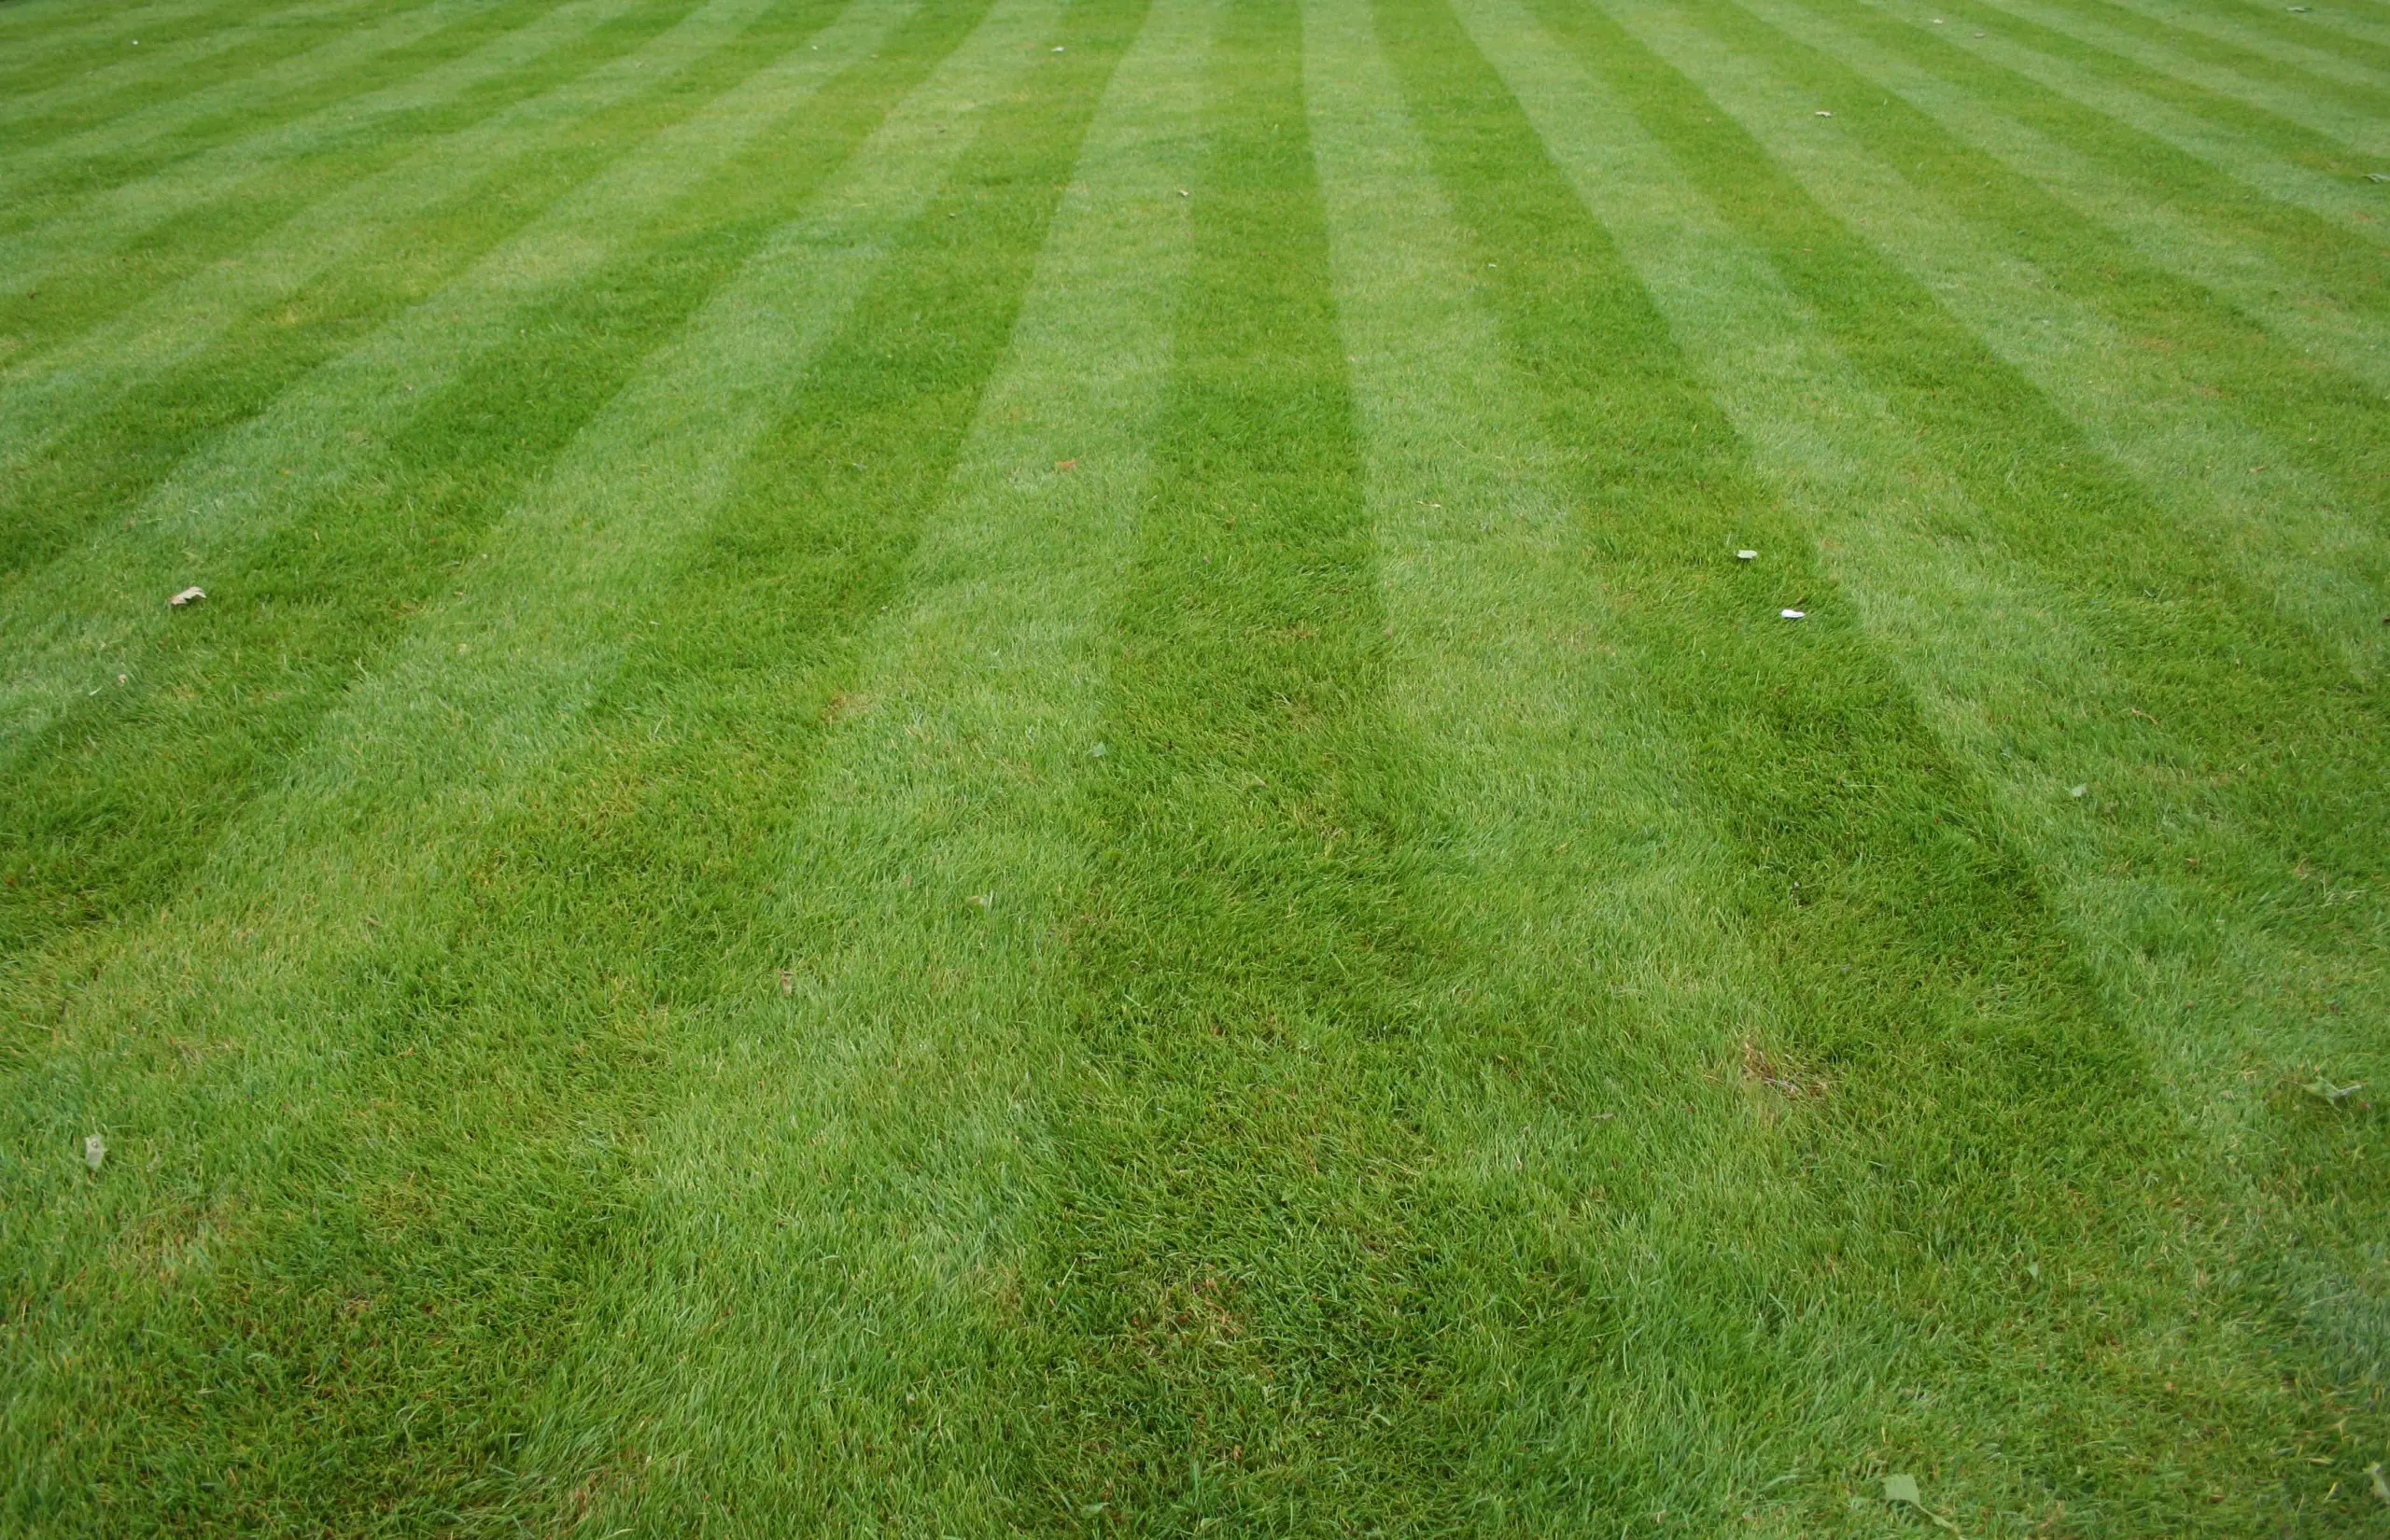 How Long Do Lawn Stripes Last?